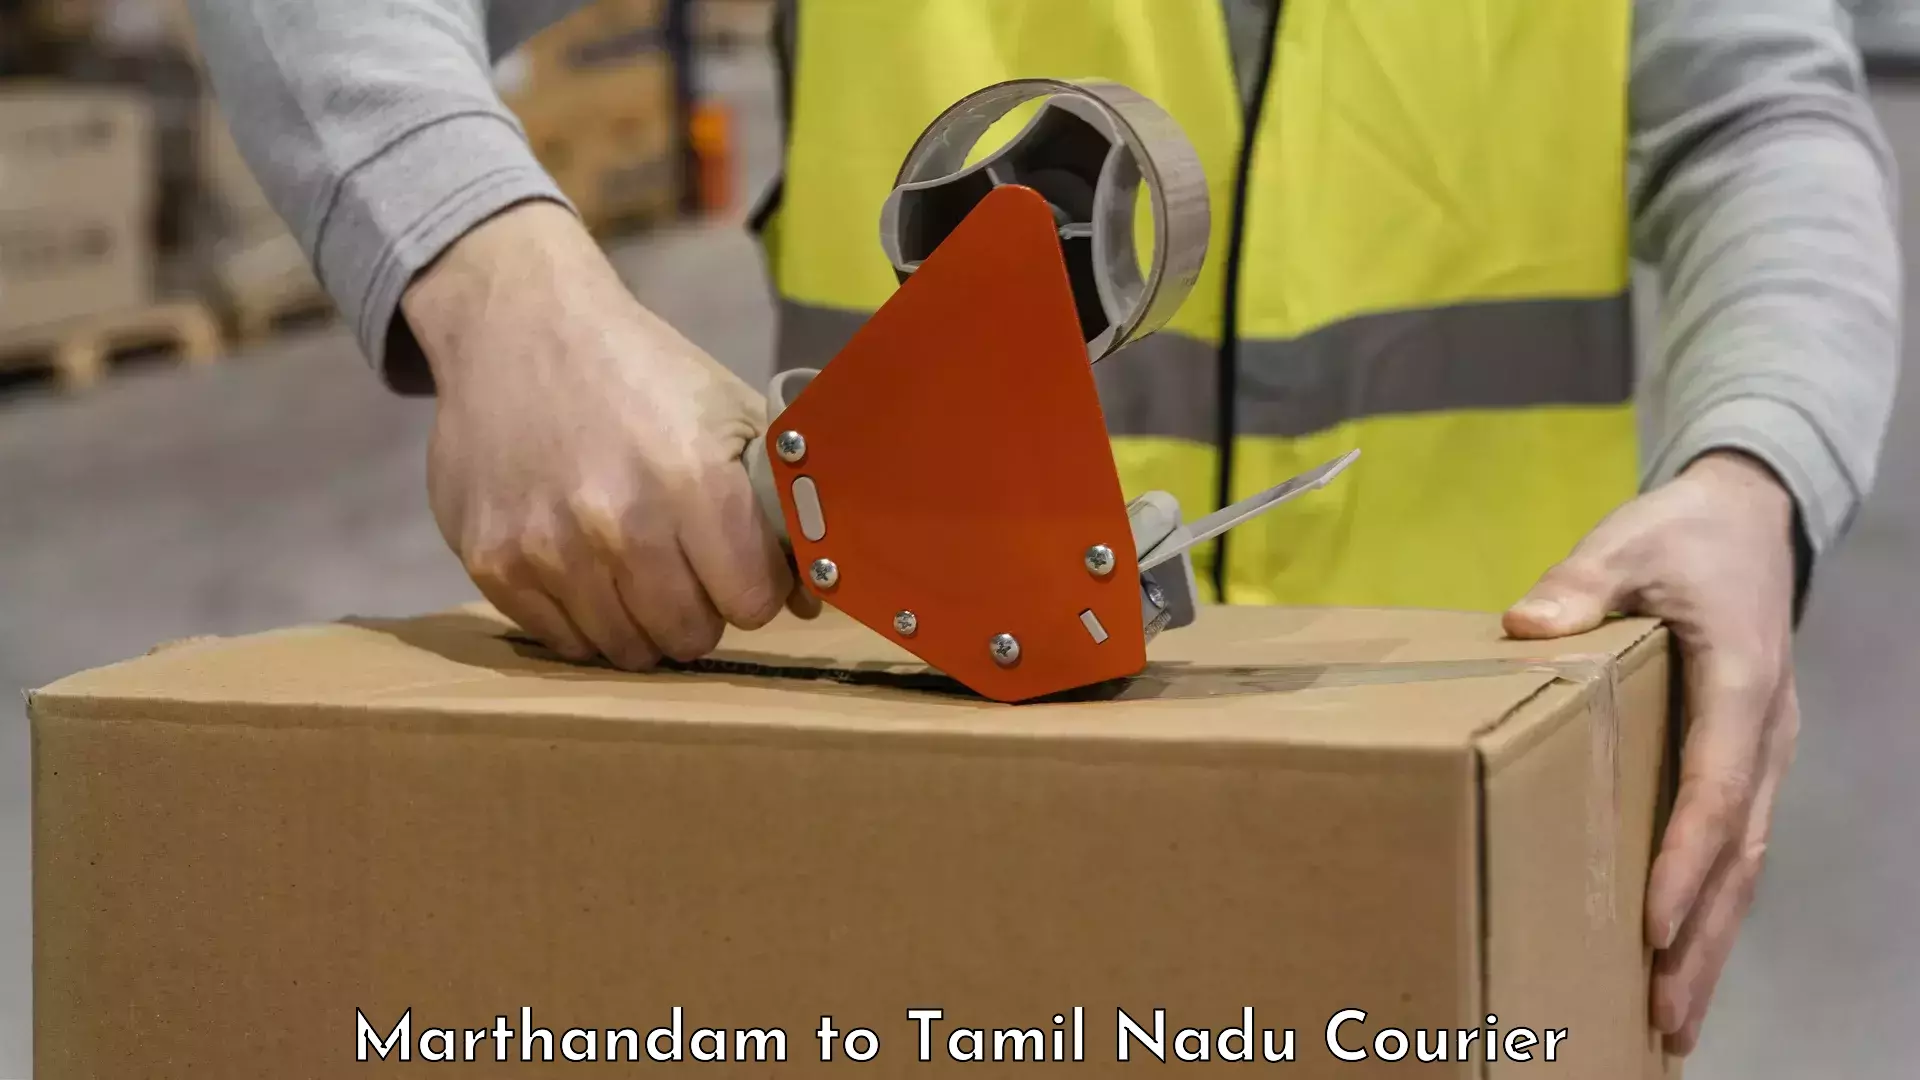 Luggage transport consultancy Marthandam to Tamil Nadu